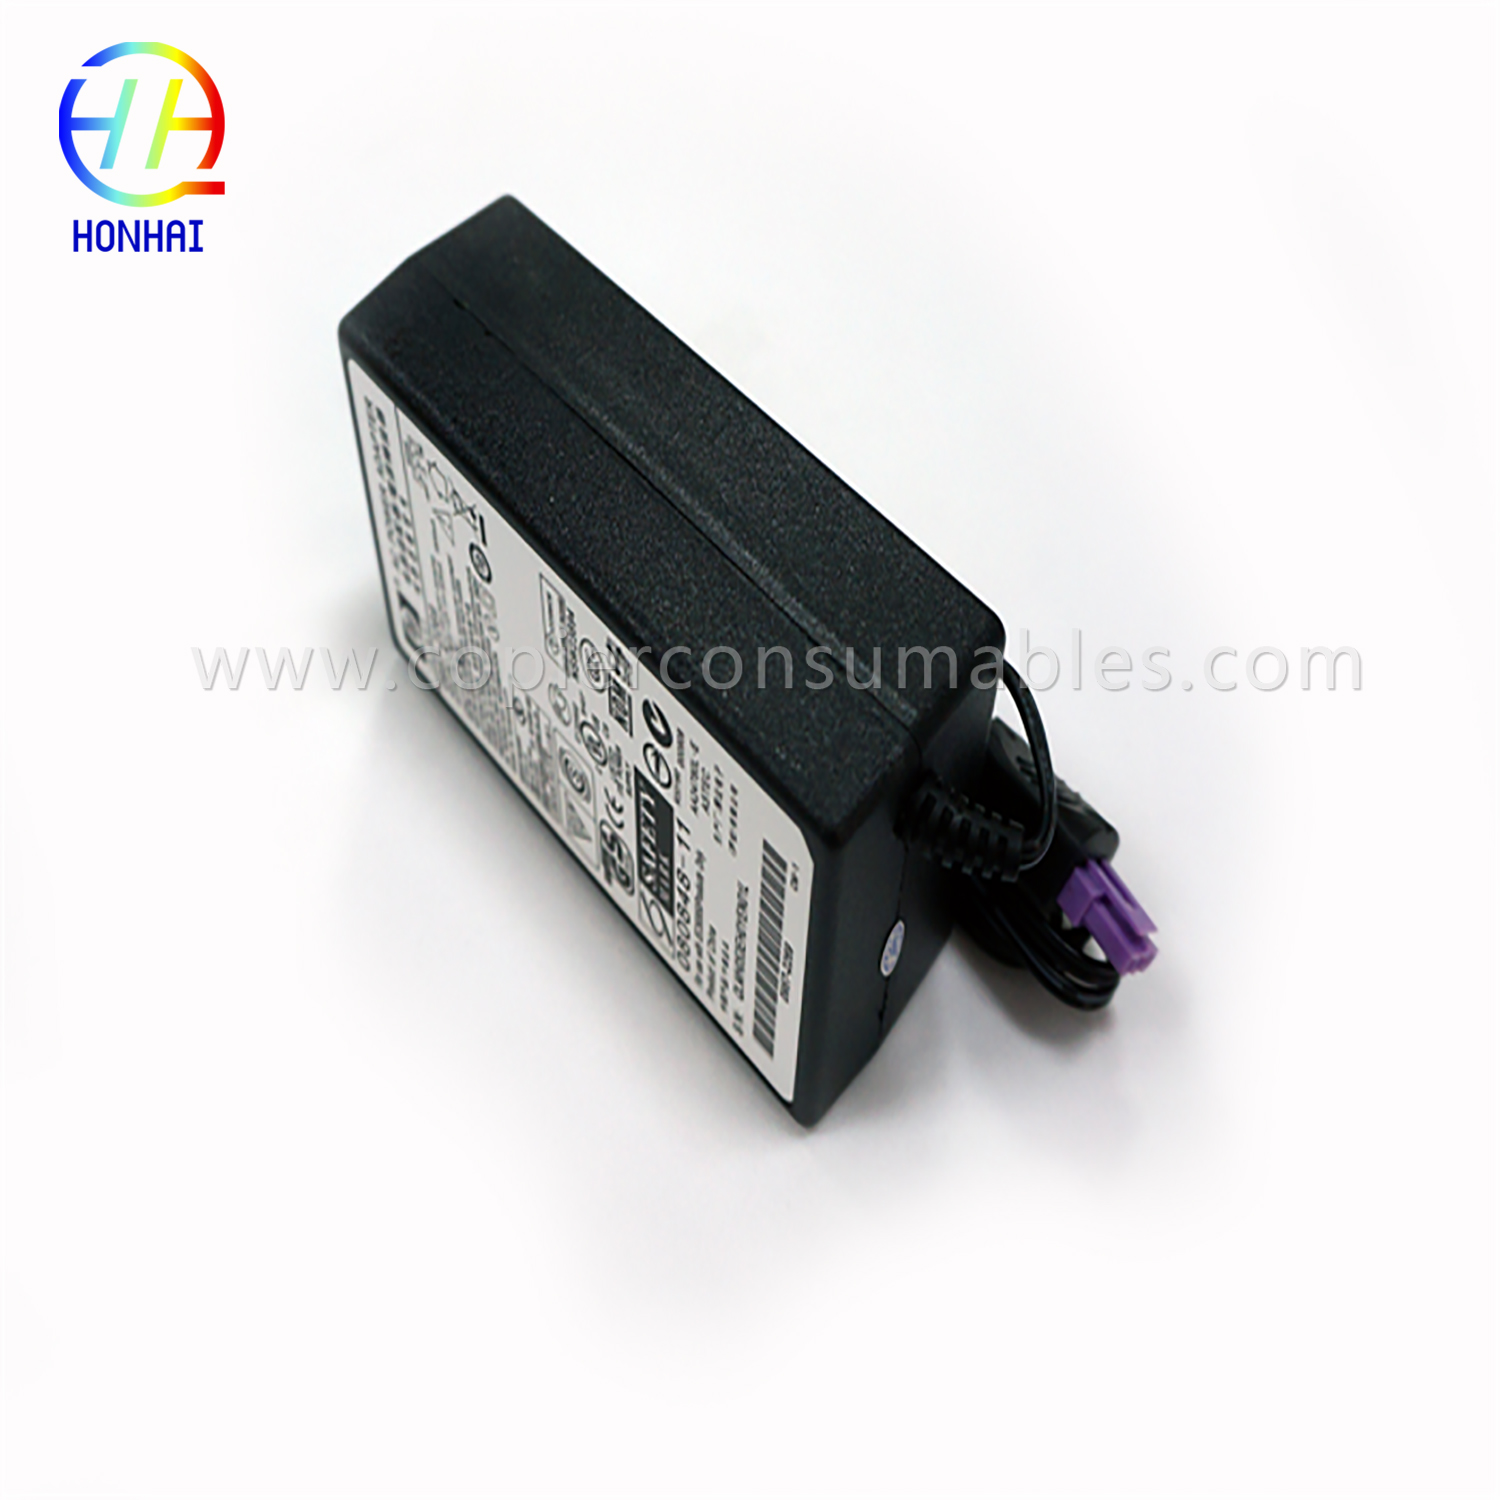 Power Adapter HP 4580 4660 4500 4488-2 拷贝 (1)